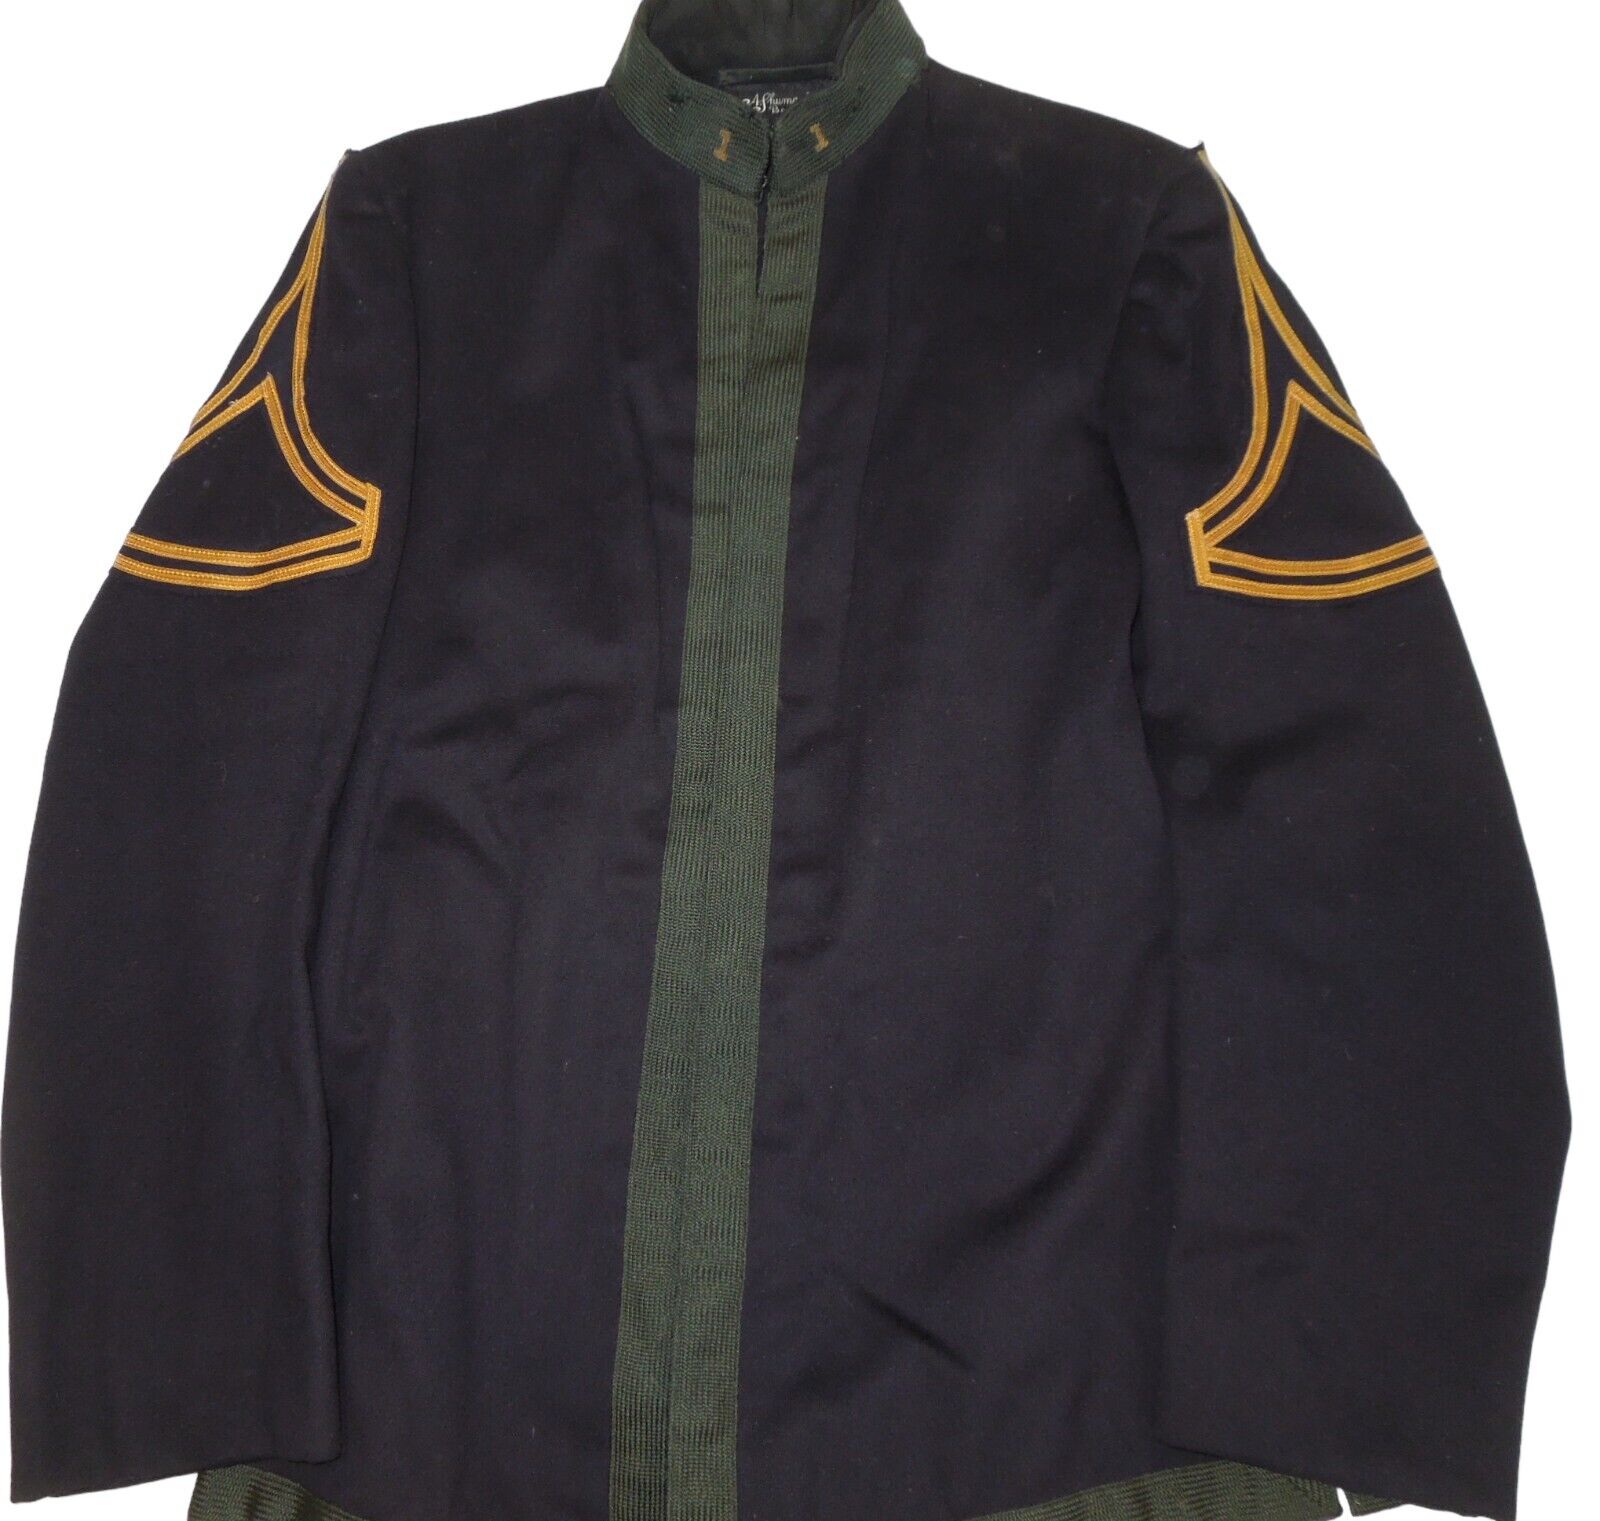 1907 Boston English High School Named Cadet Lieutenant Uniform Jacket Bullion